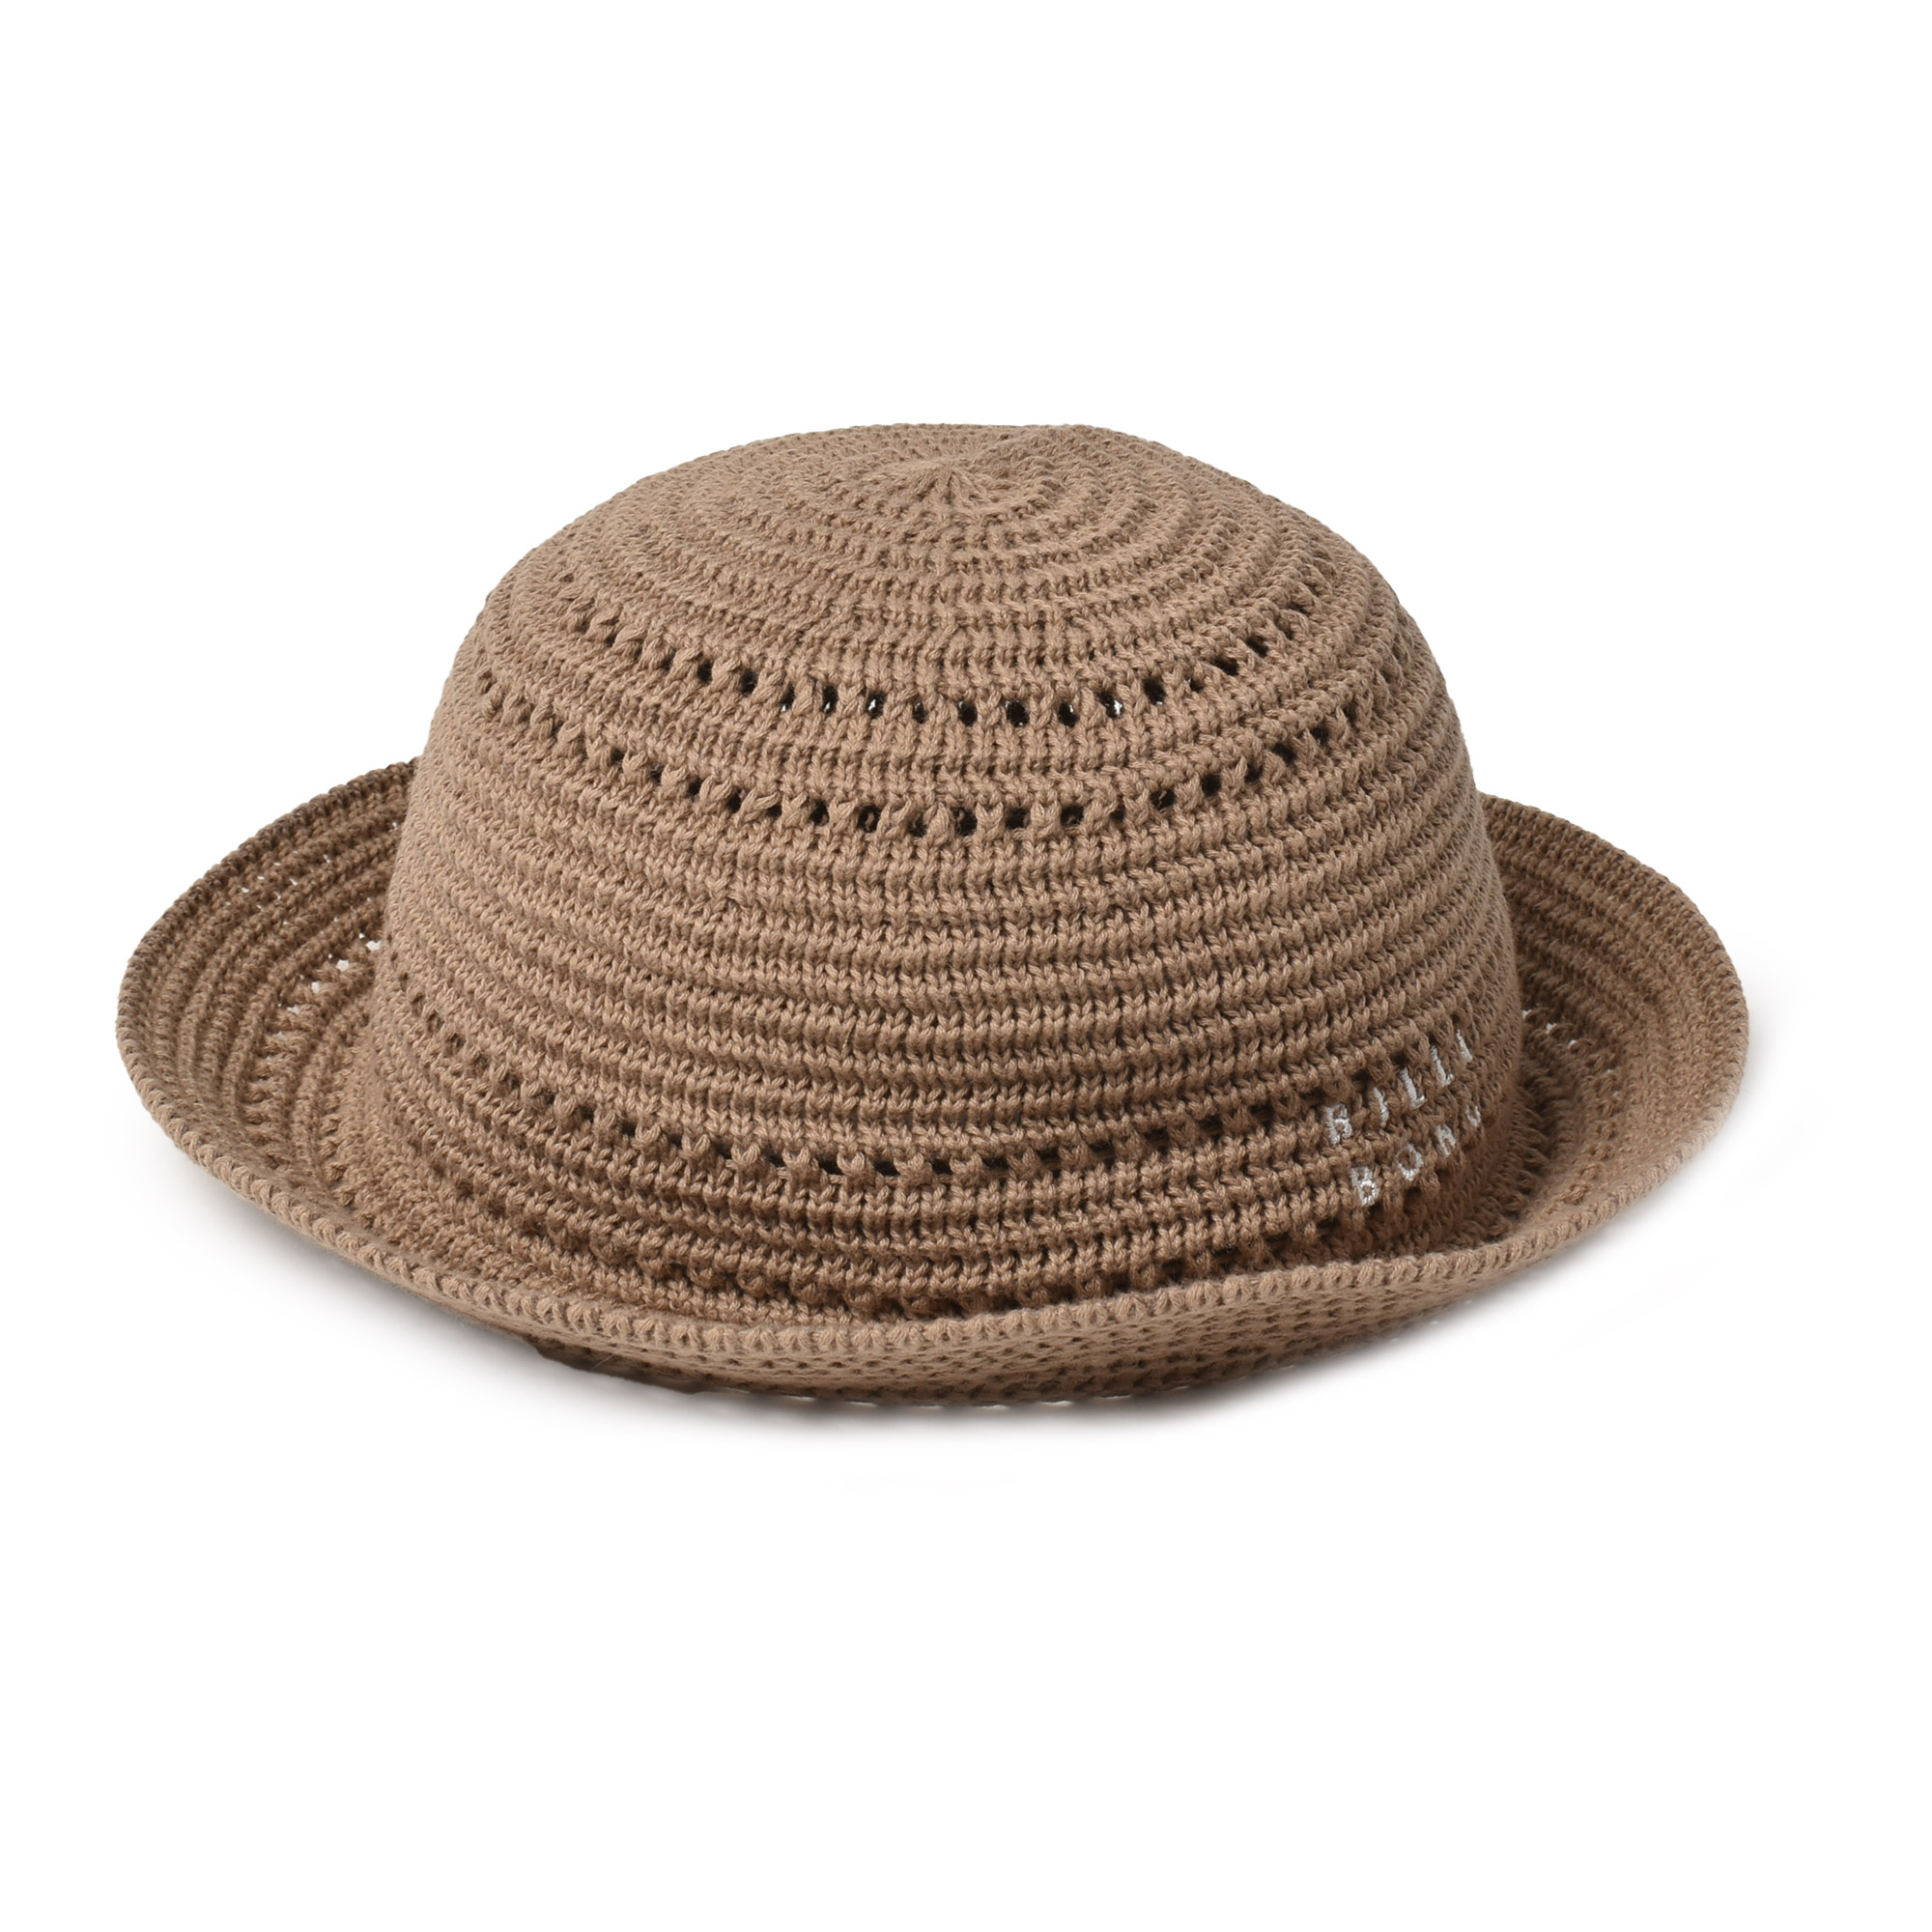 SALE ビラボン 帽子 レディース CROCHE HAT BILLABONG BE013917 ブ...